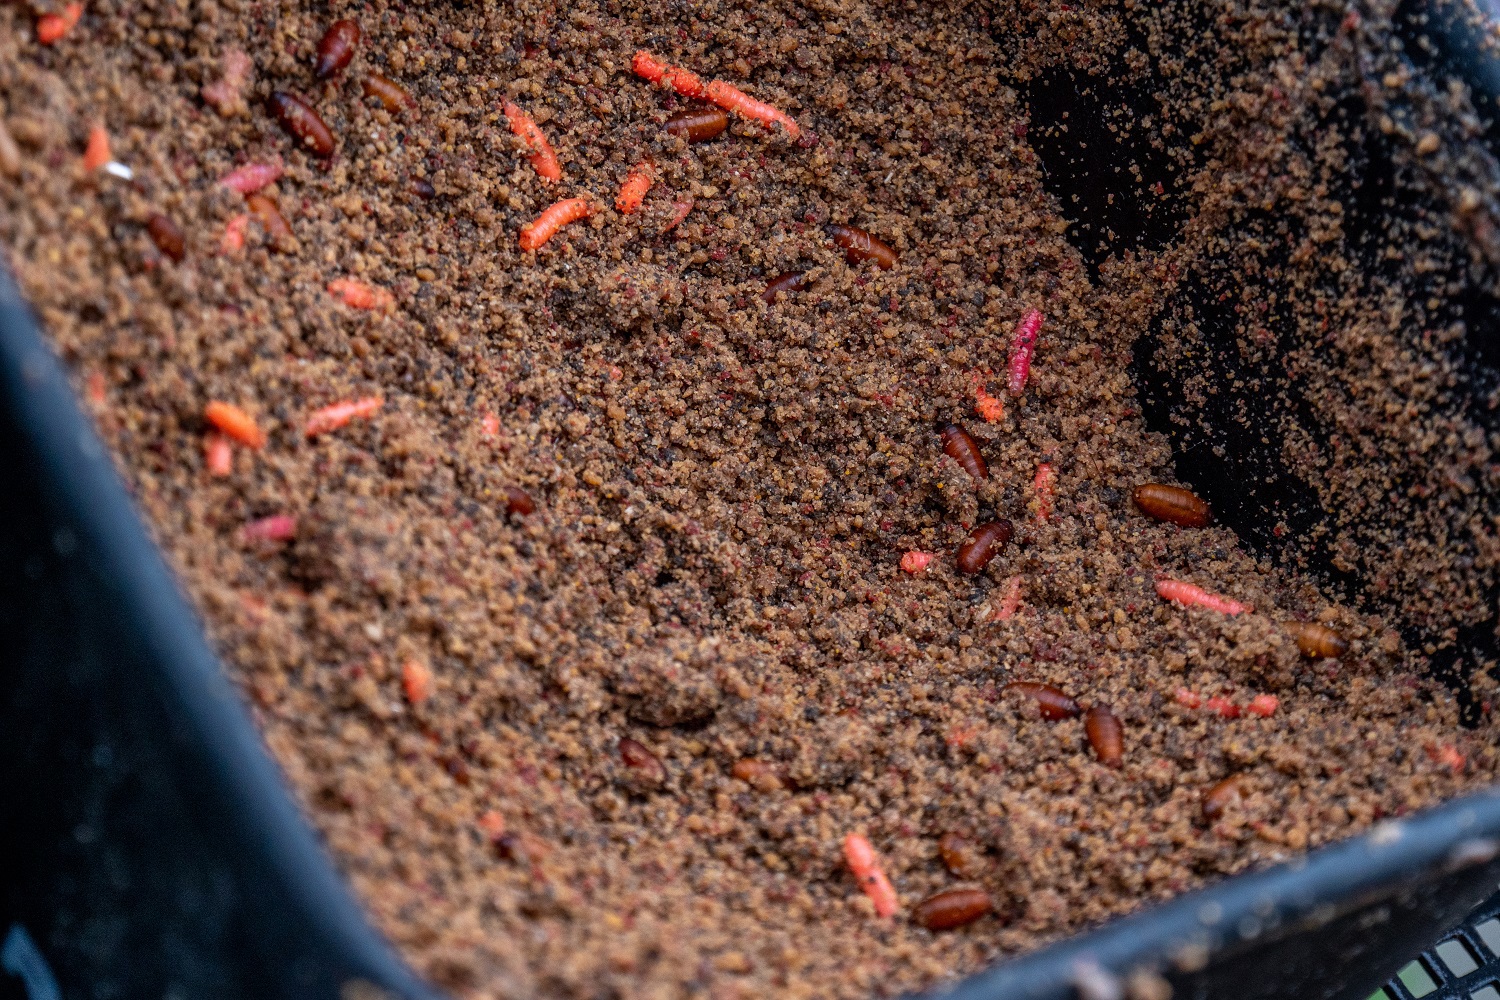 A closeup of maggots in bait mix